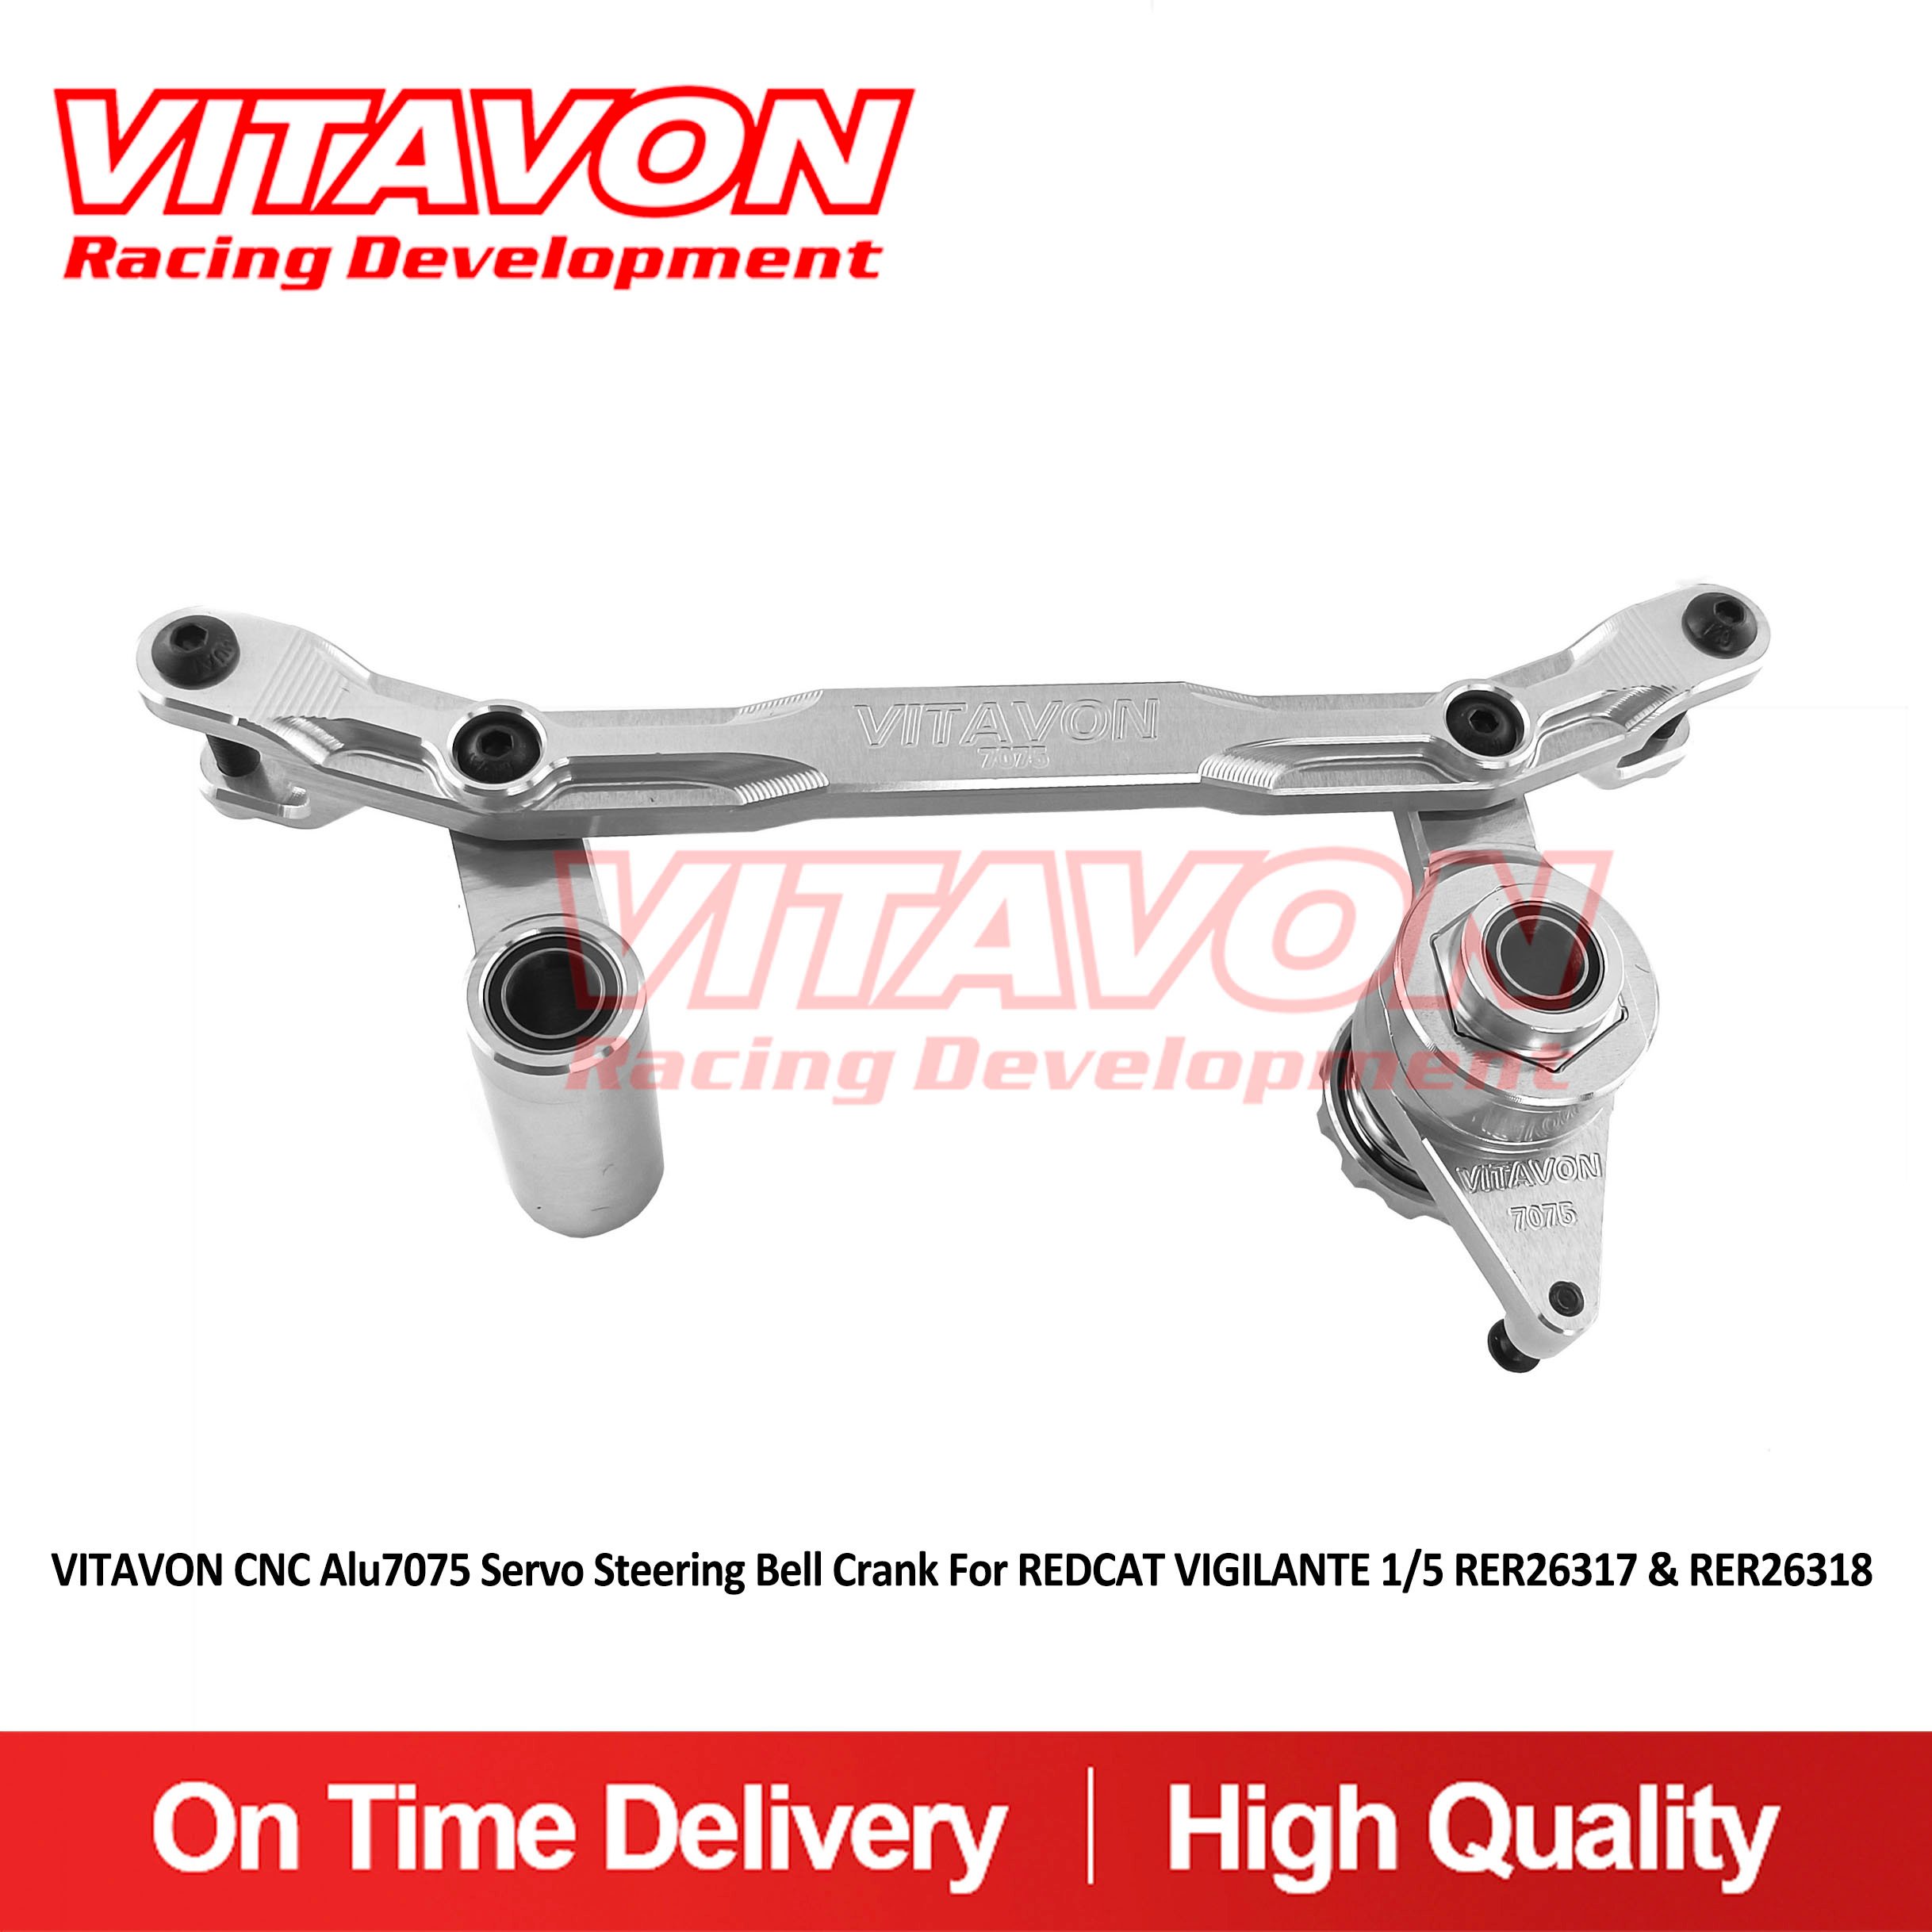 VITAVON CNC Alu7075 Servo Steering Bell Crank For REDCAT VIGILANTE 1/5 RER26317 & RER26318